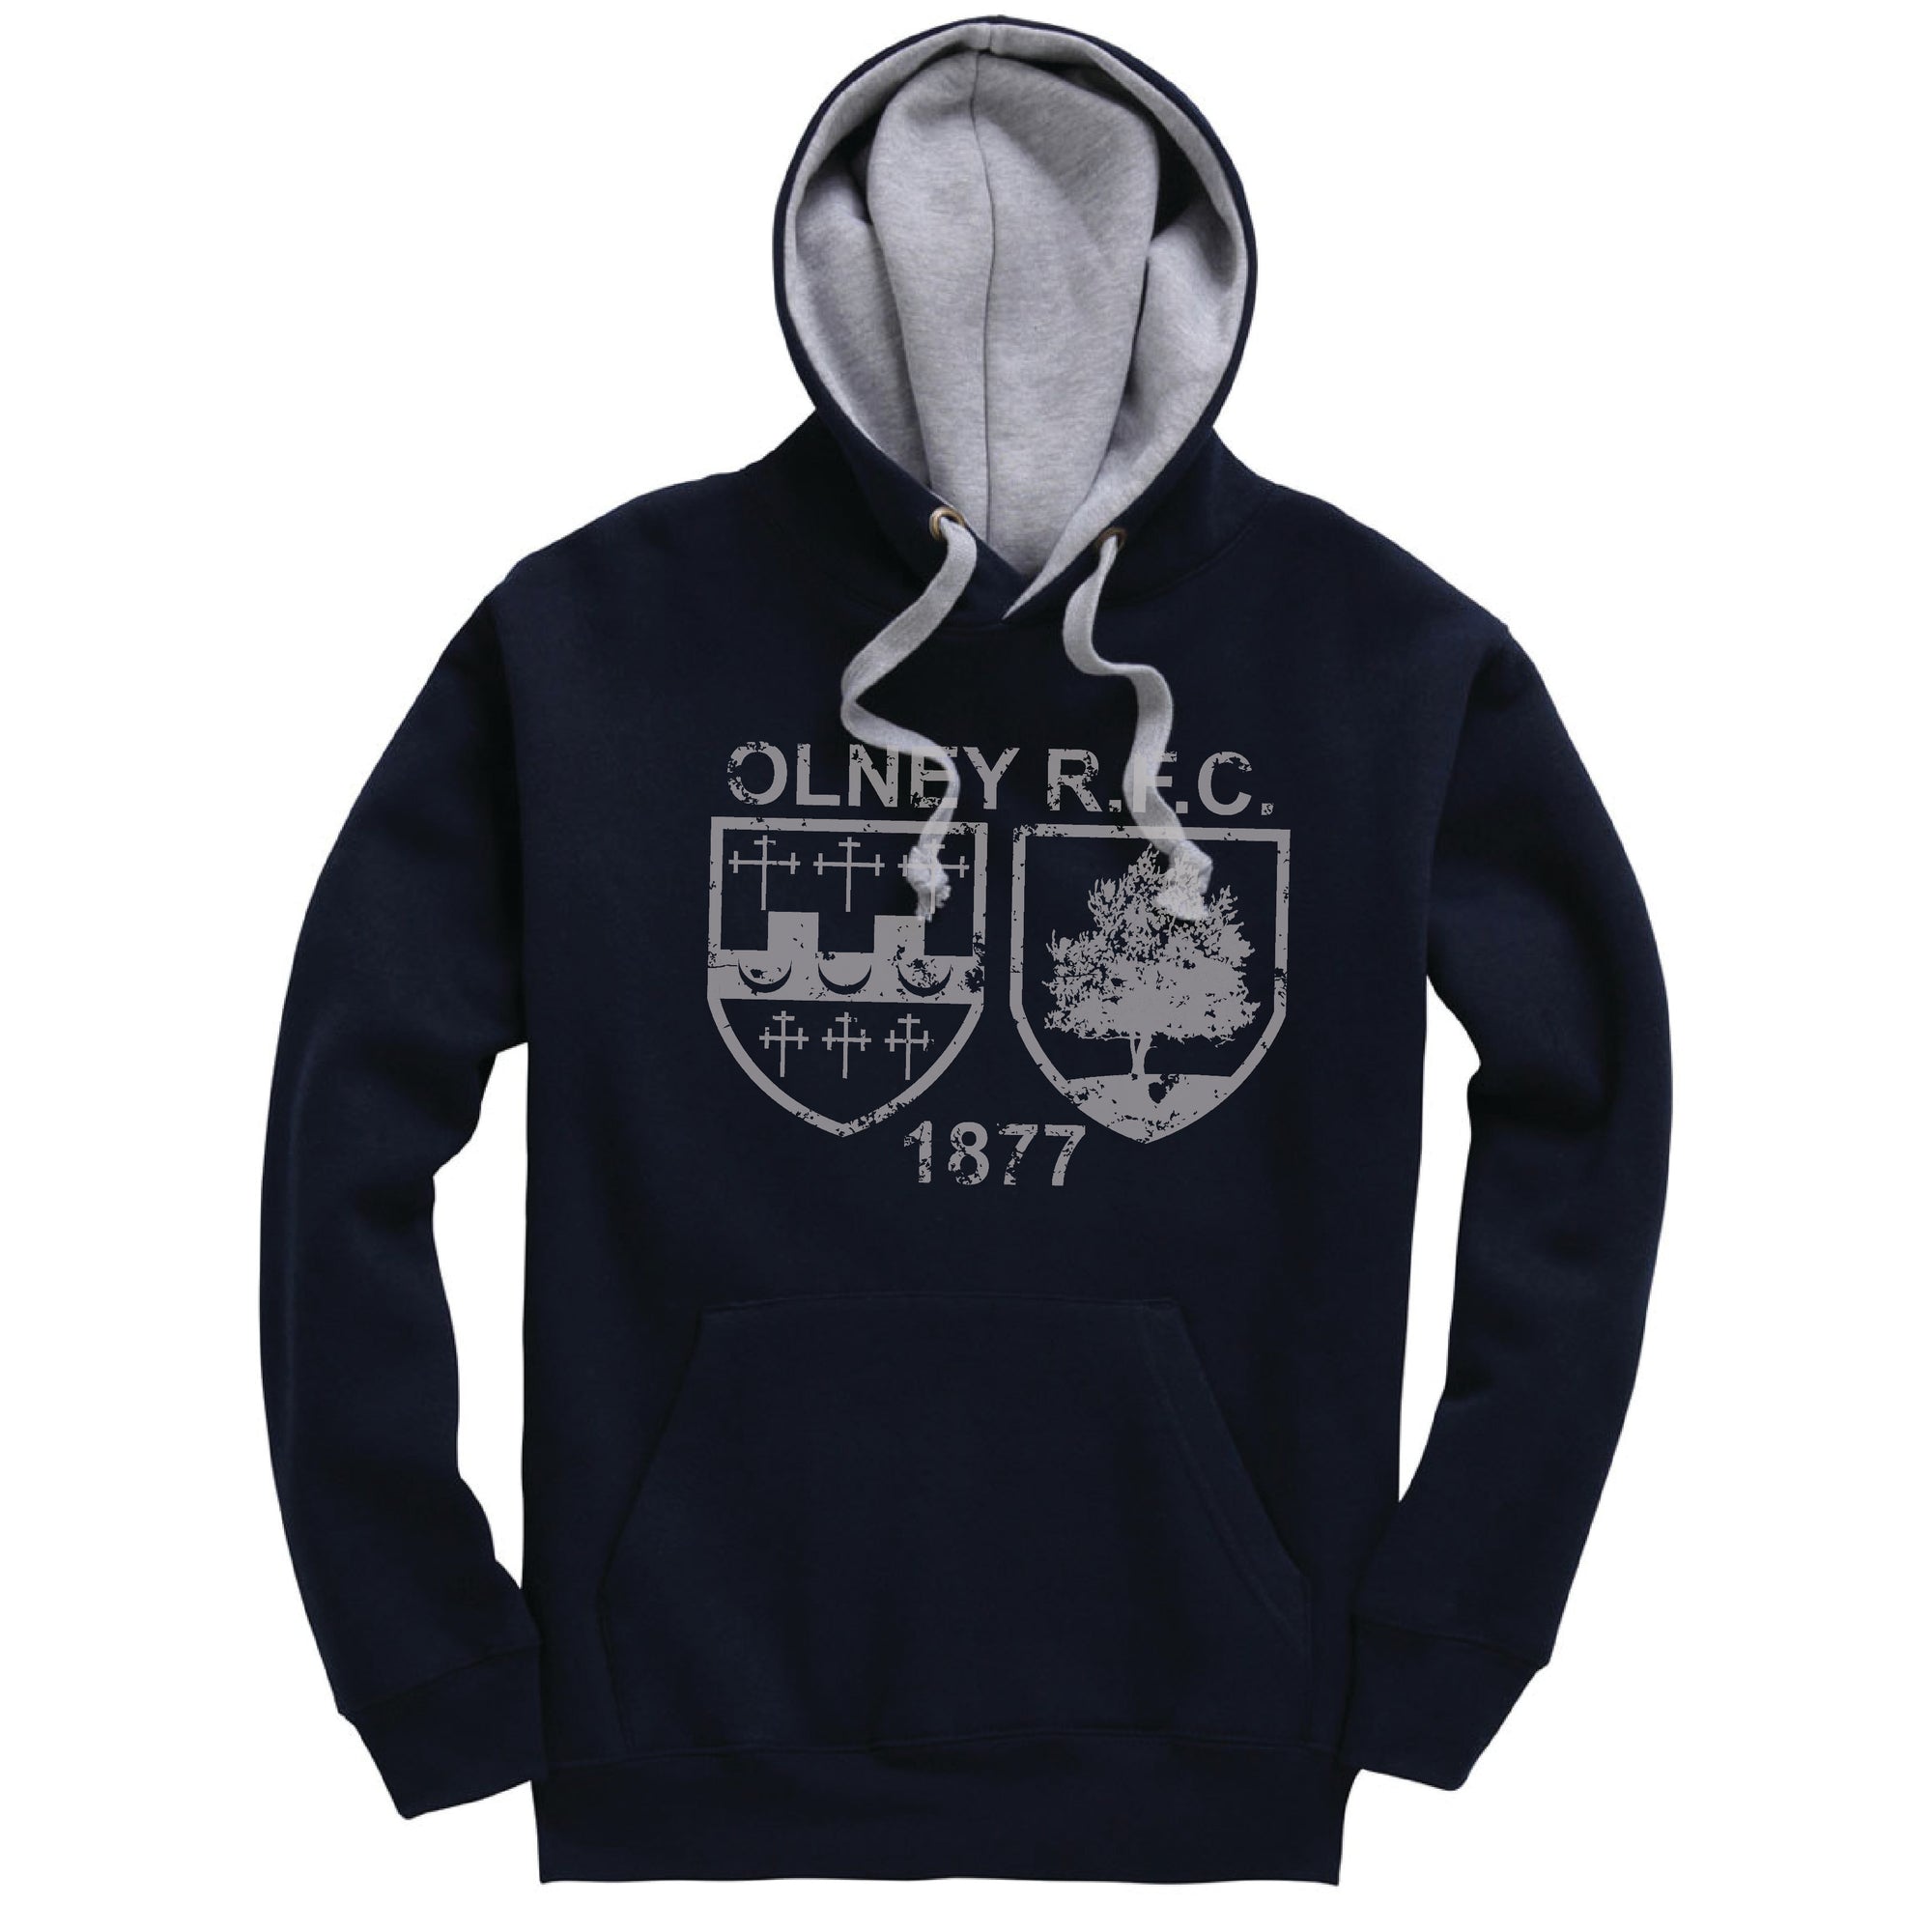 Olney RFC Supporter's Hoodie - Navy/grey